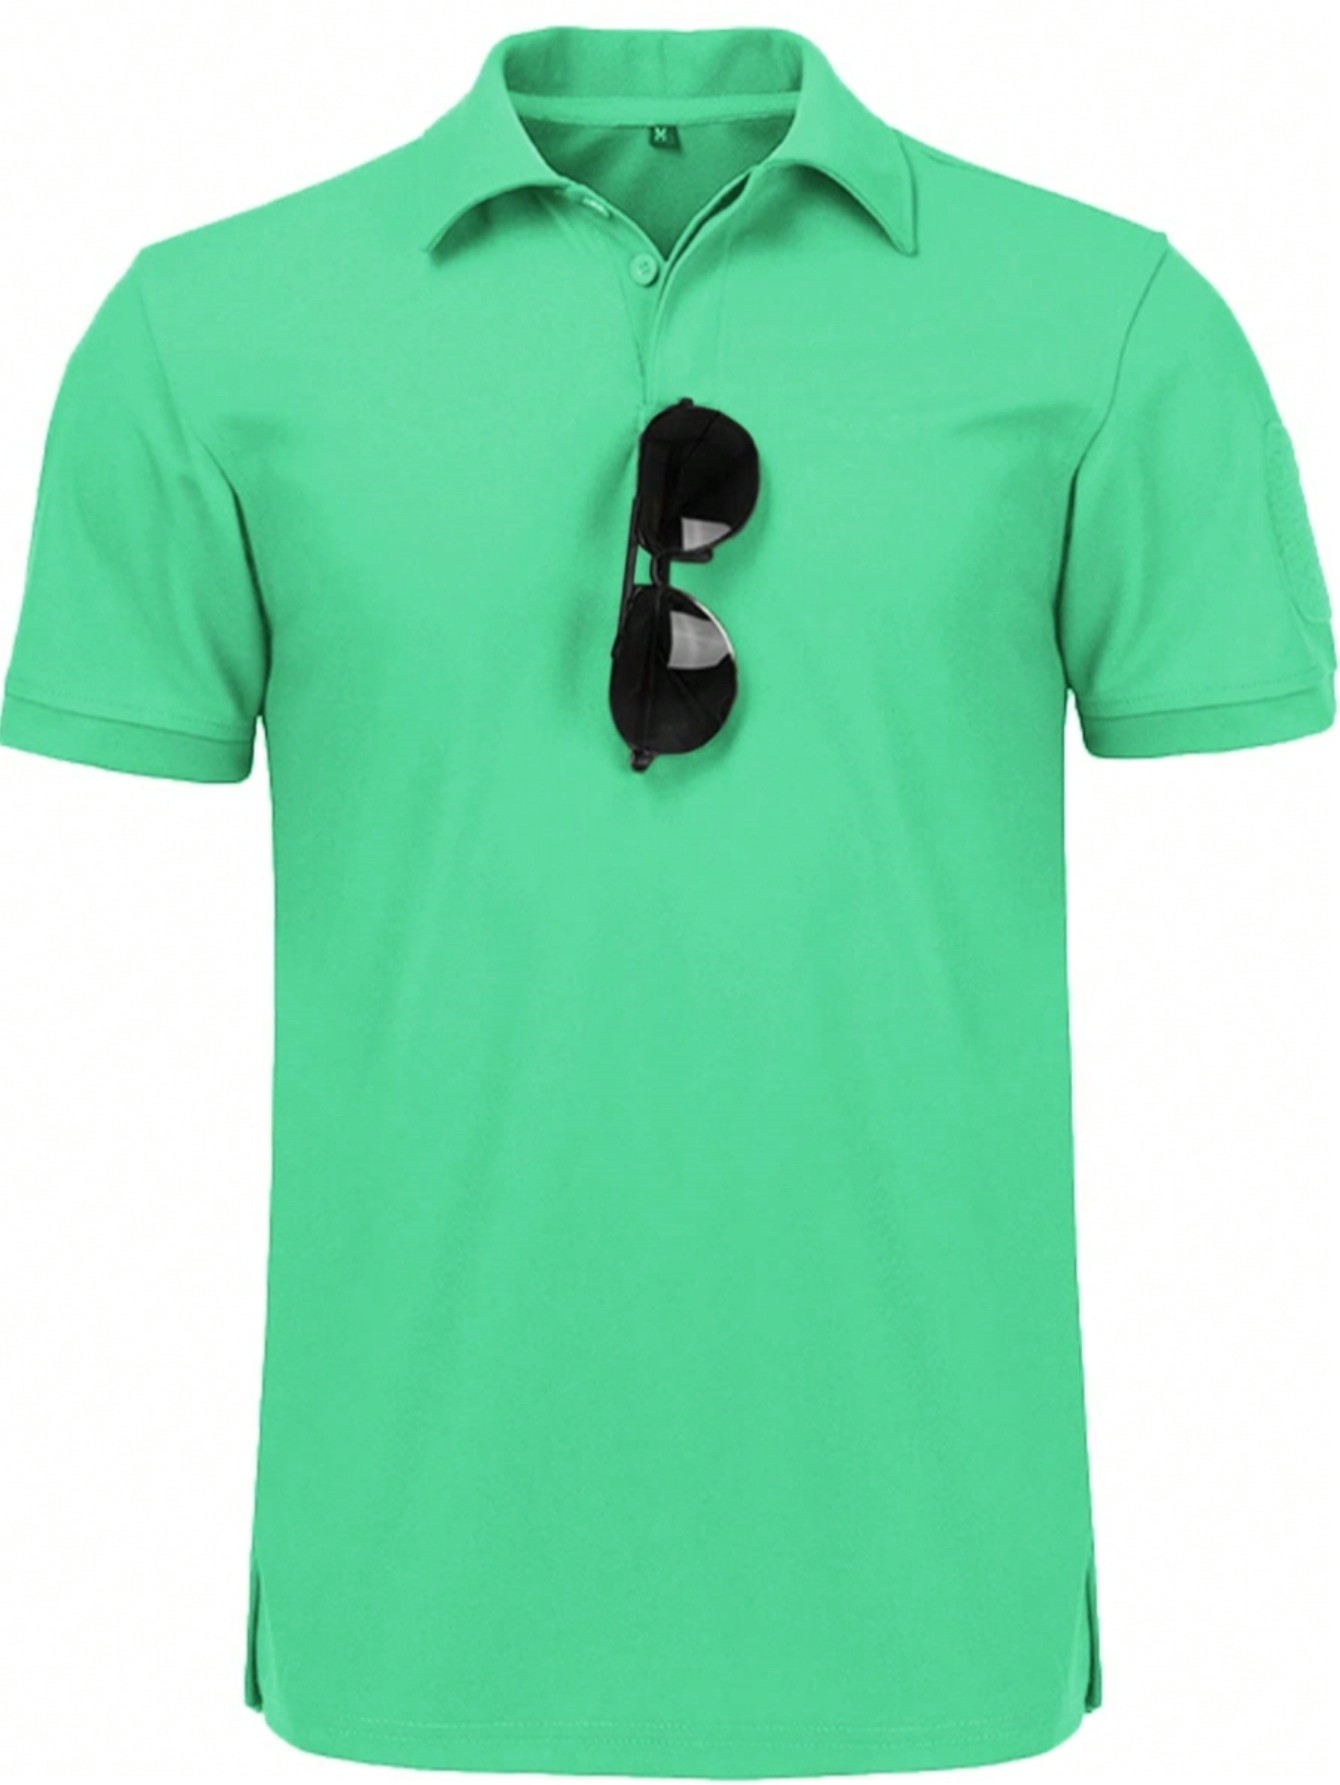 finn flare футболка поло с коротким рукавом мужская Мужская рубашка поло с коротким рукавом для отдыха, мятно-зеленый